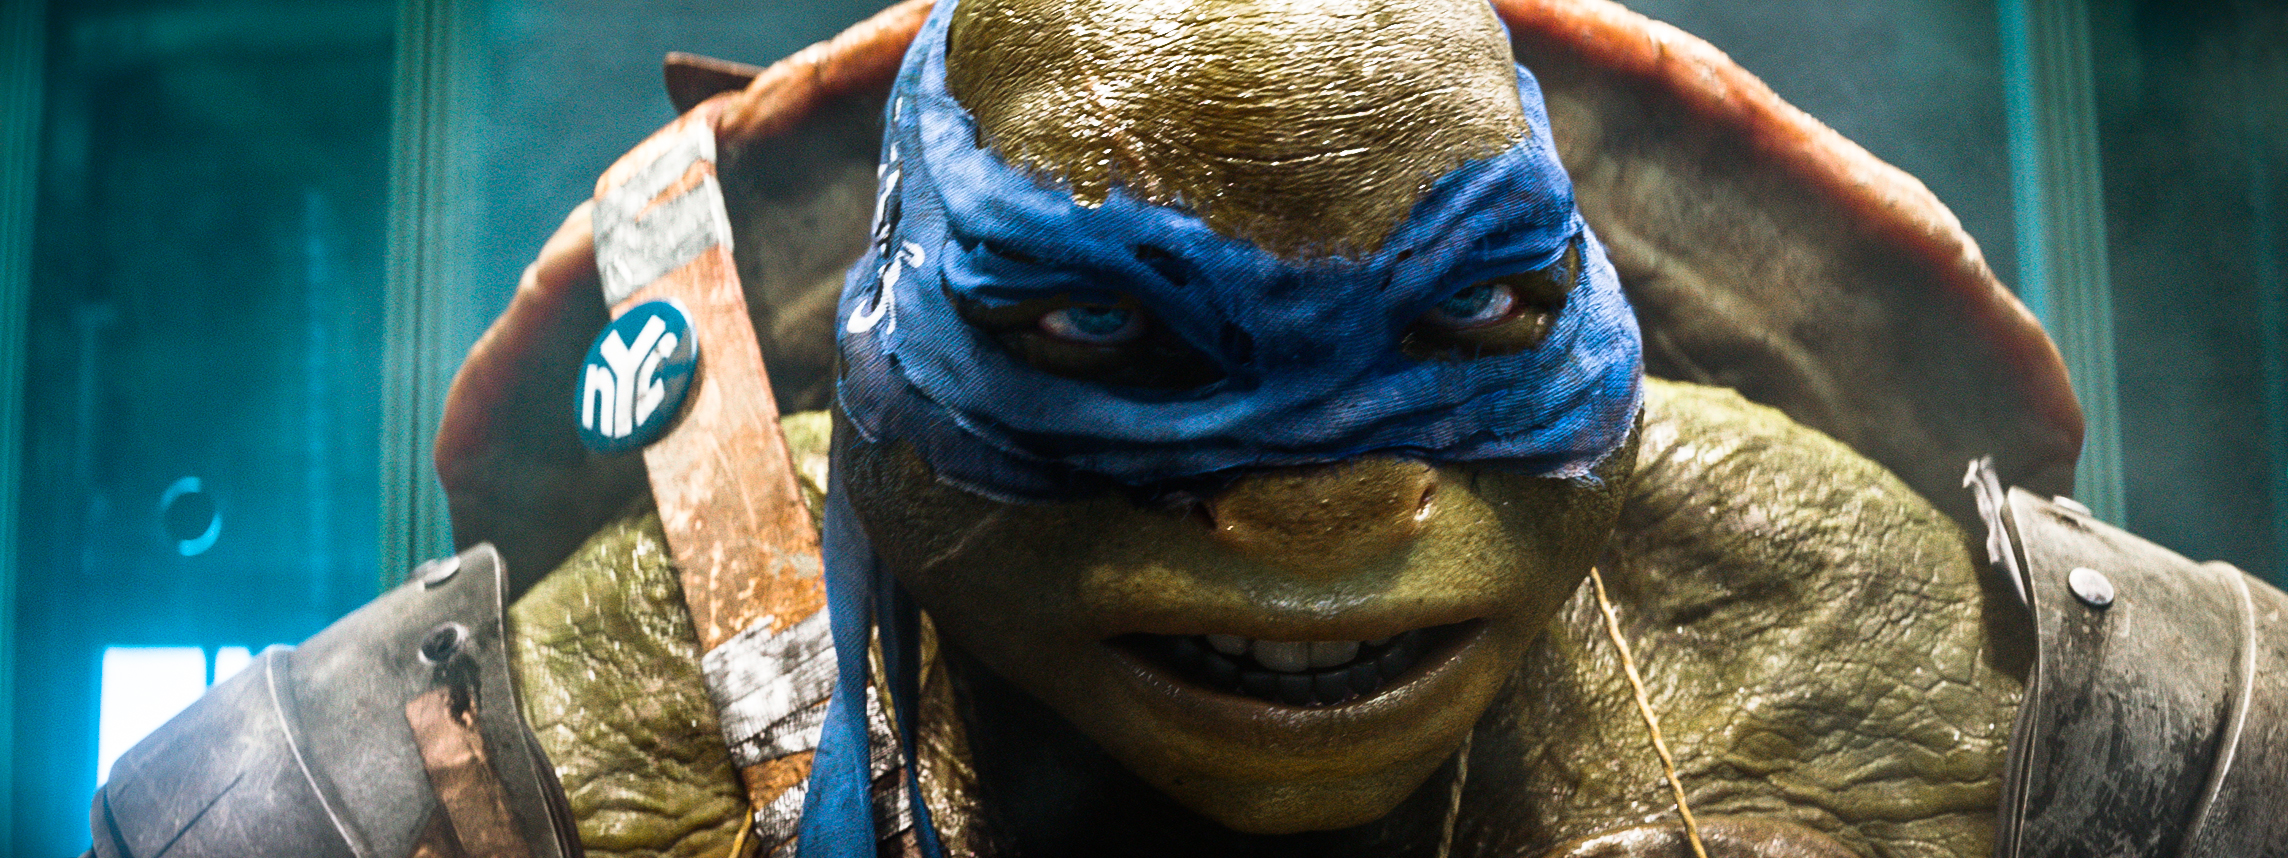 340197 Bild herunterladen filme, teenage mutant ninja turtles (2014), teenage mutant ninja turtles - Hintergrundbilder und Bildschirmschoner kostenlos